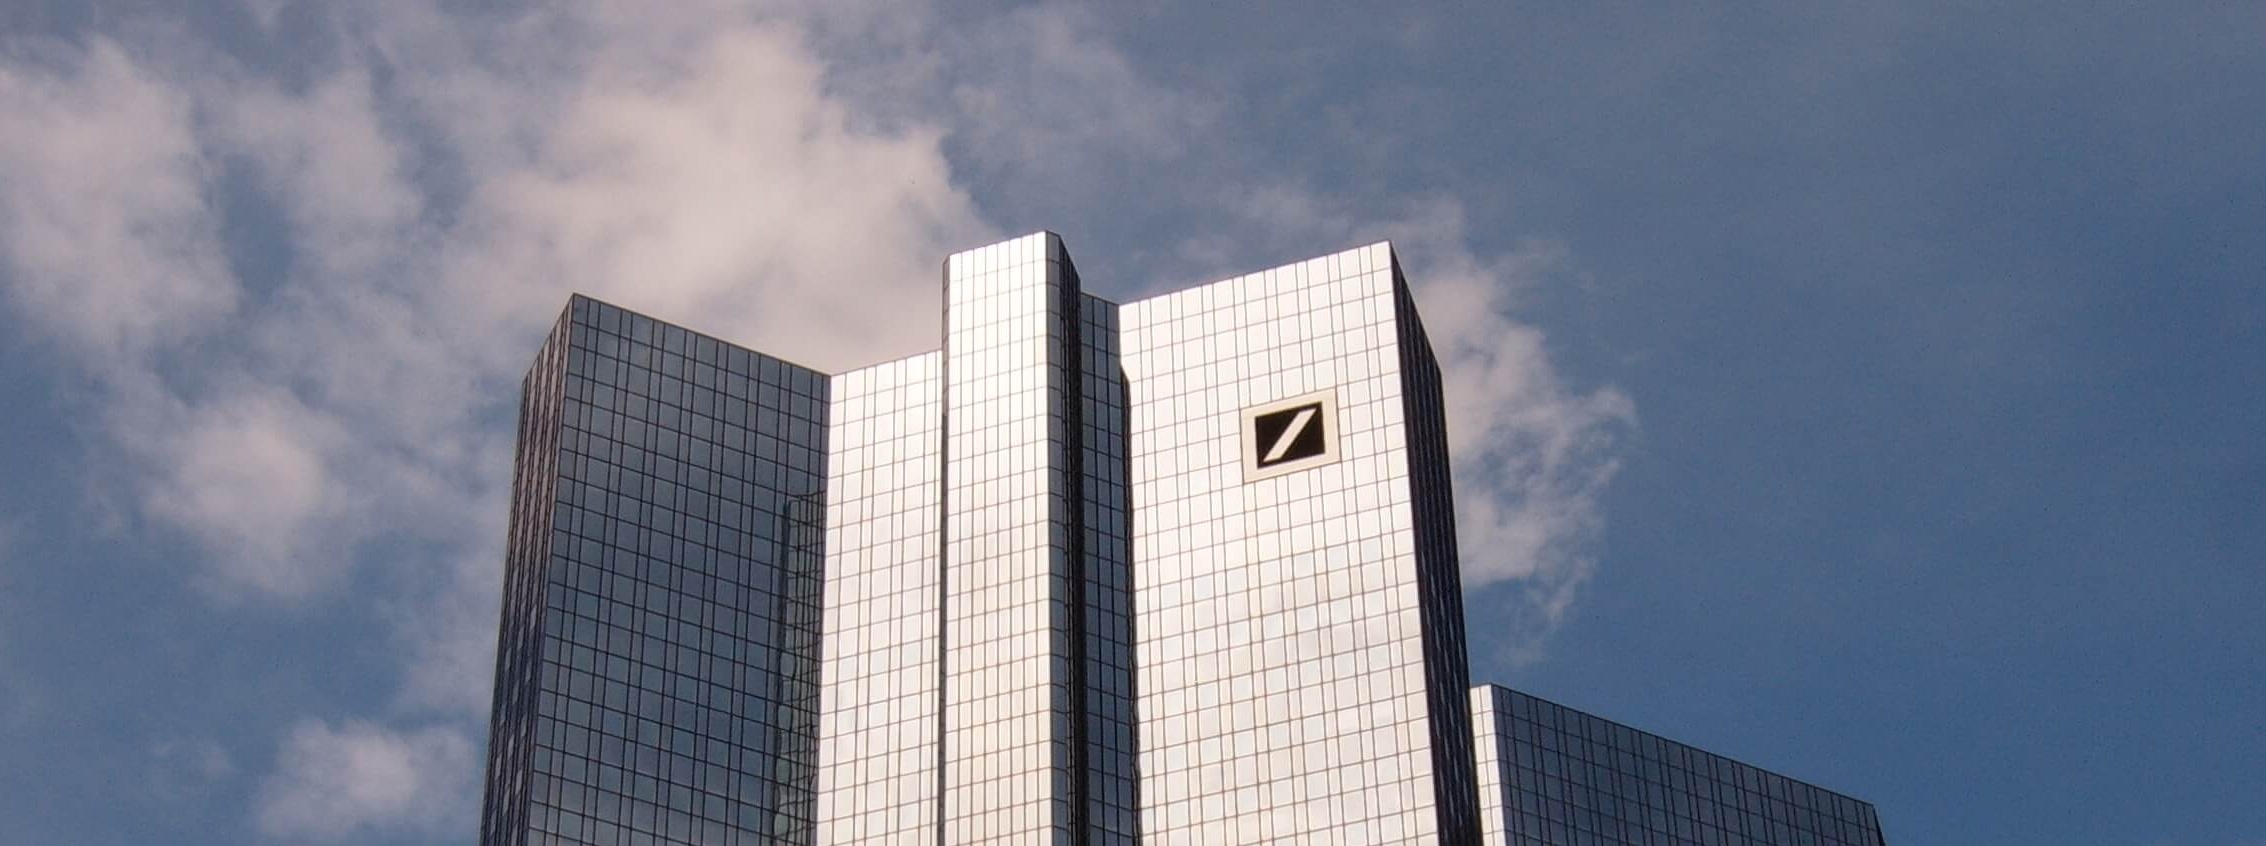 FinanceFeeds | Deutsche Financial institution explores digital property